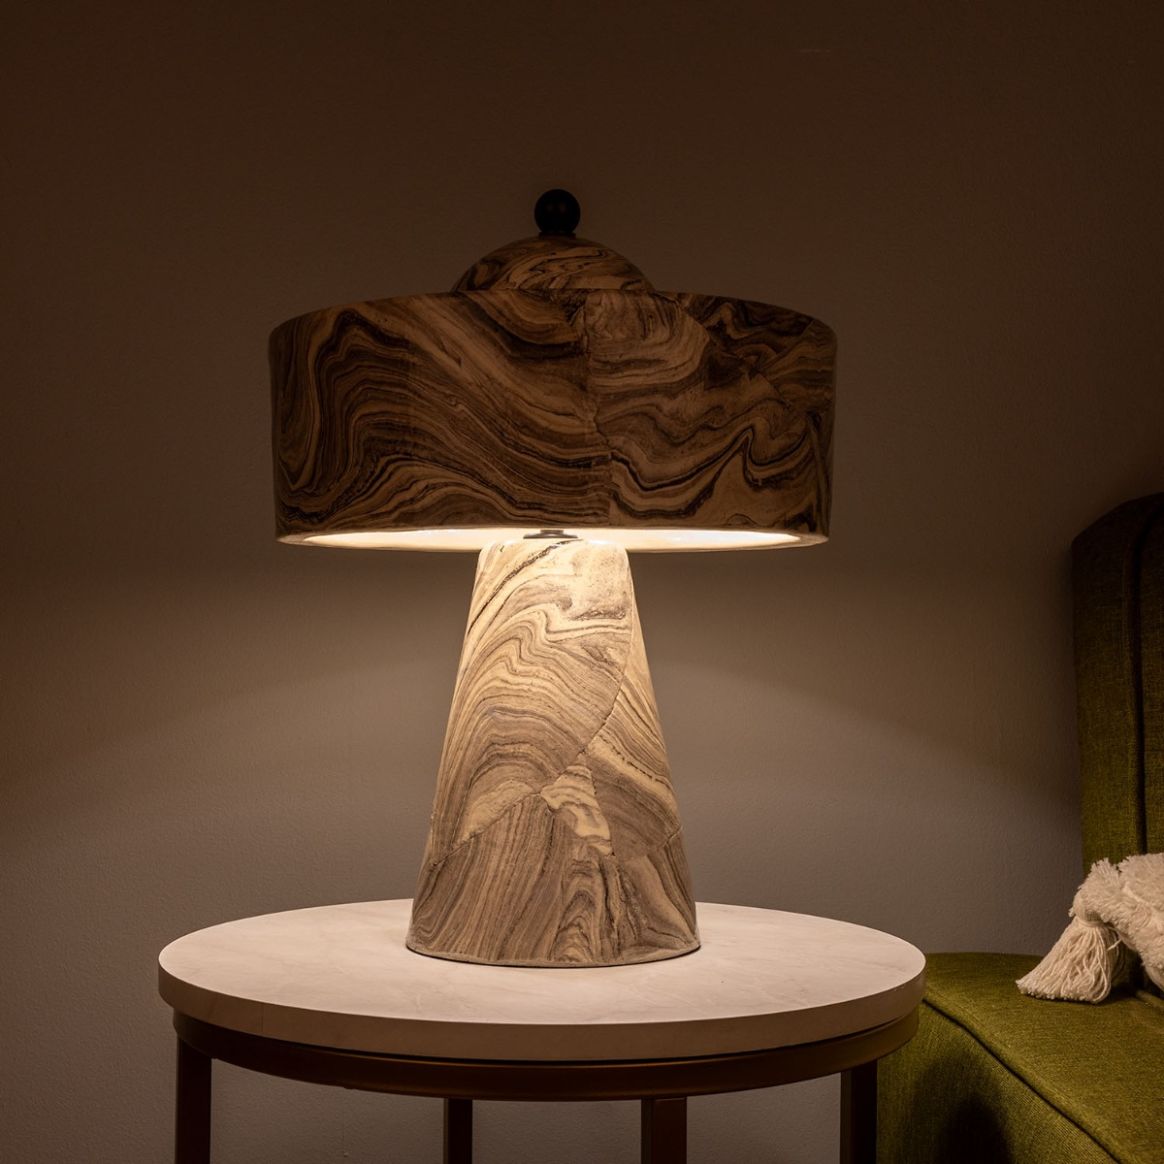 Wood & Ceramic Table Lamp, Modern Light Fixtures